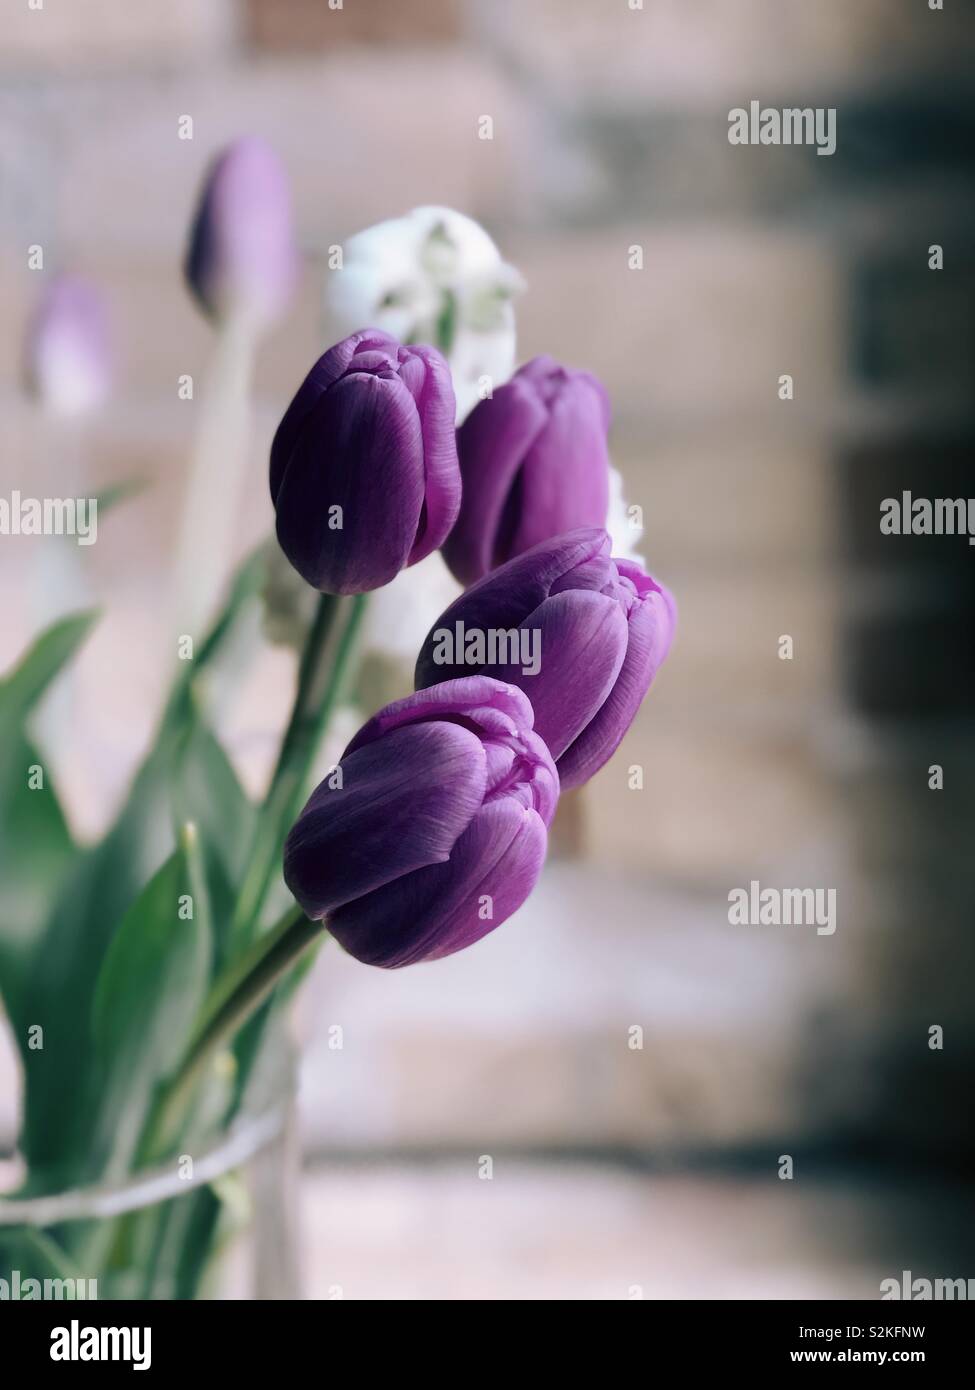 Purple tulips in a vase. Stock Photo